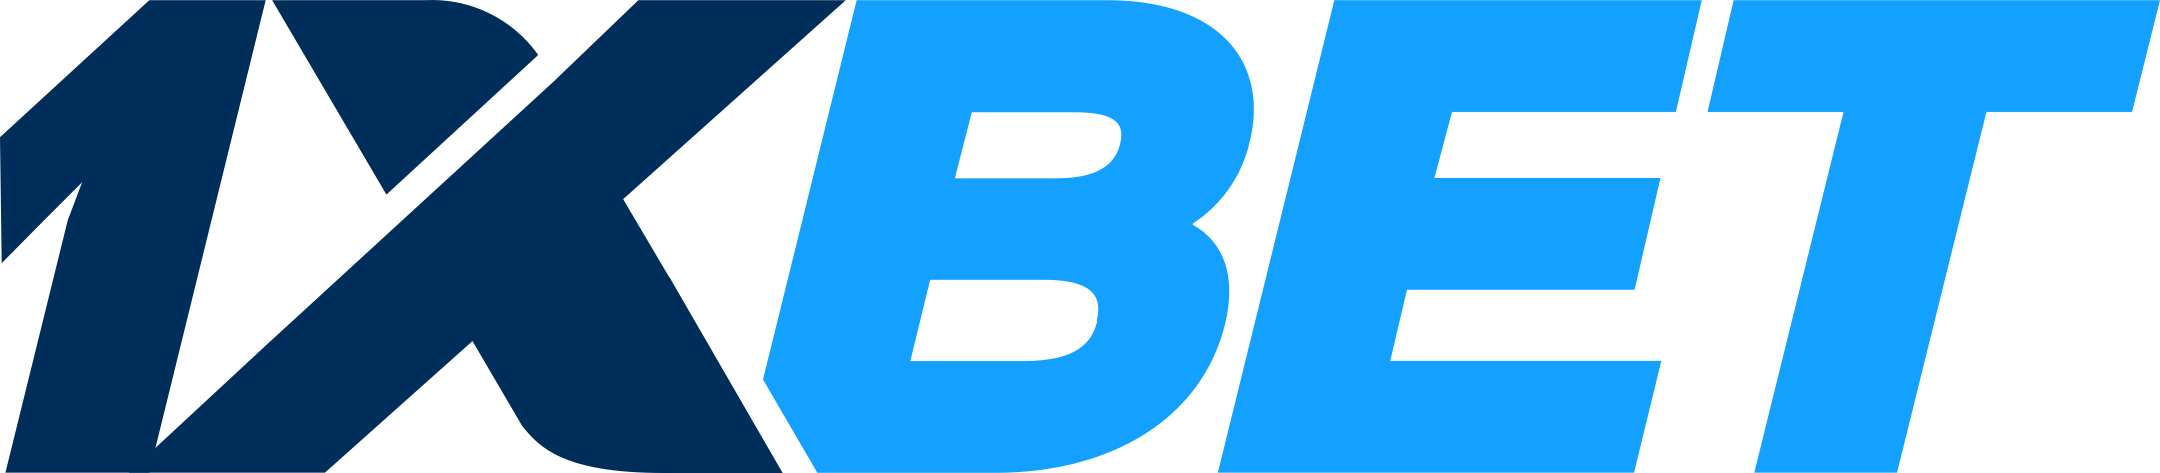 1XBET Logo.